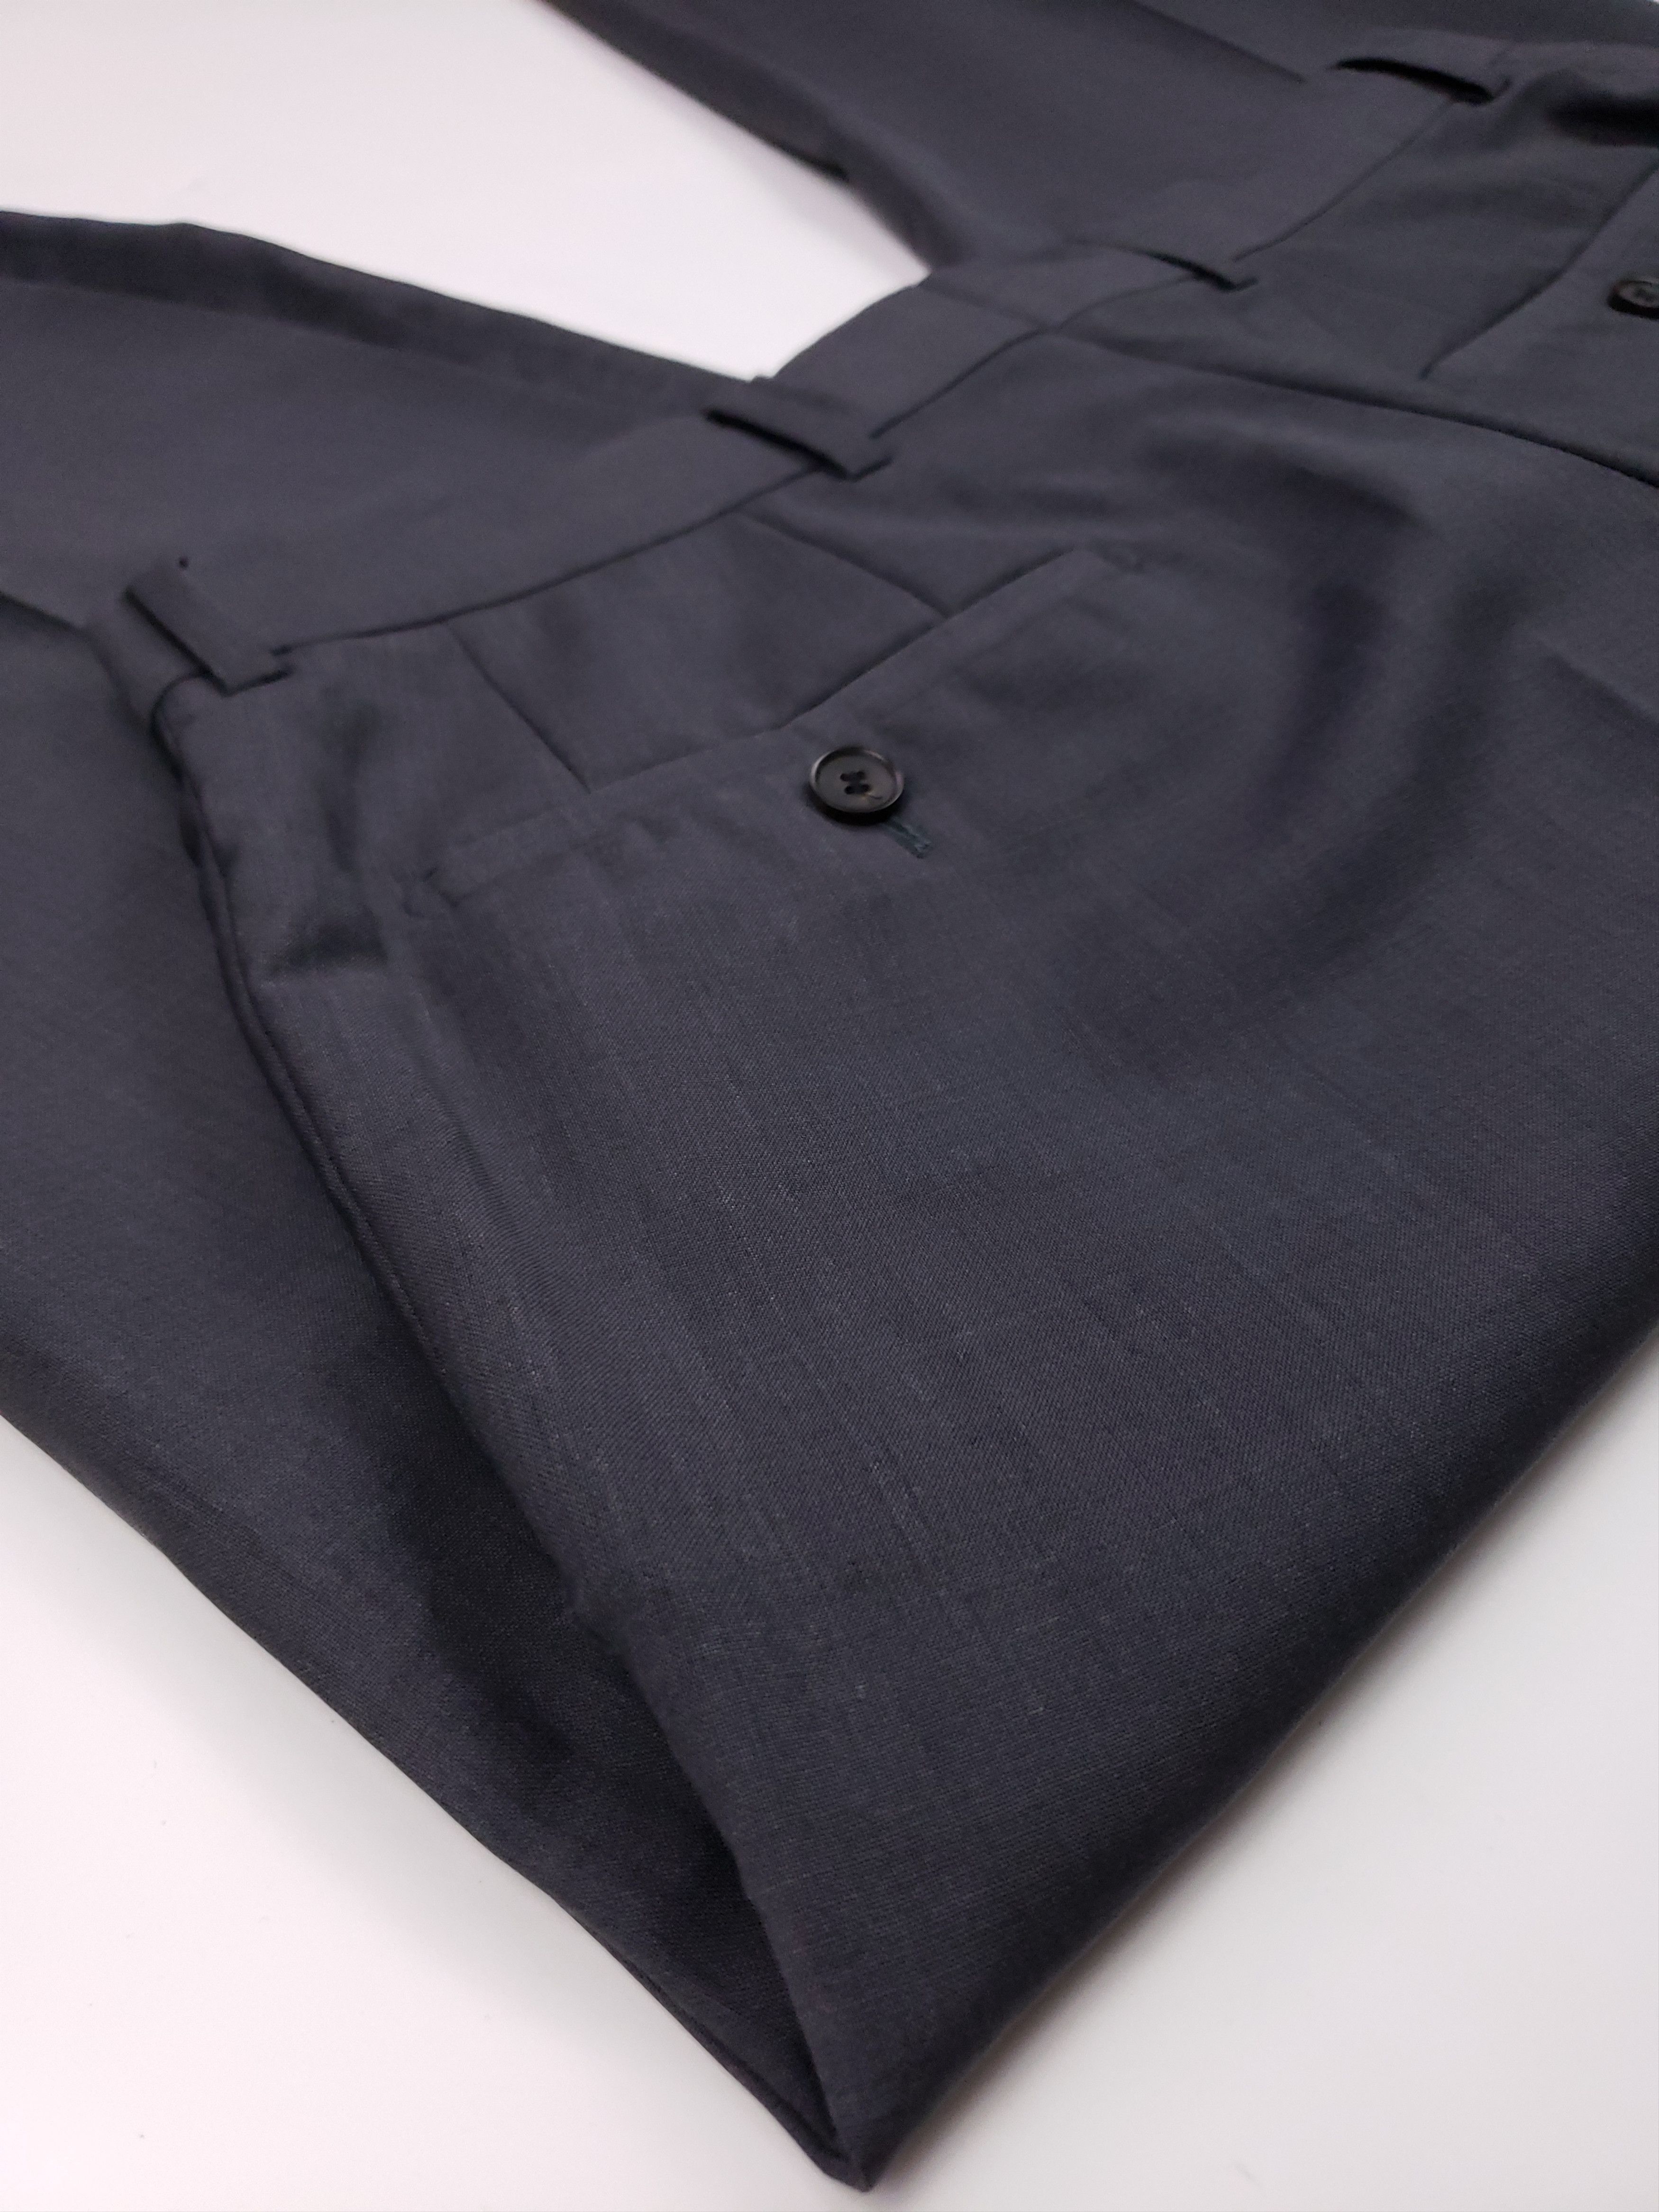 Hugo Boss Hugo Boss James Brown Pants 32x30 Gray Charcoal Wool Cashme Size US 32 / EU 48 - 11 Thumbnail